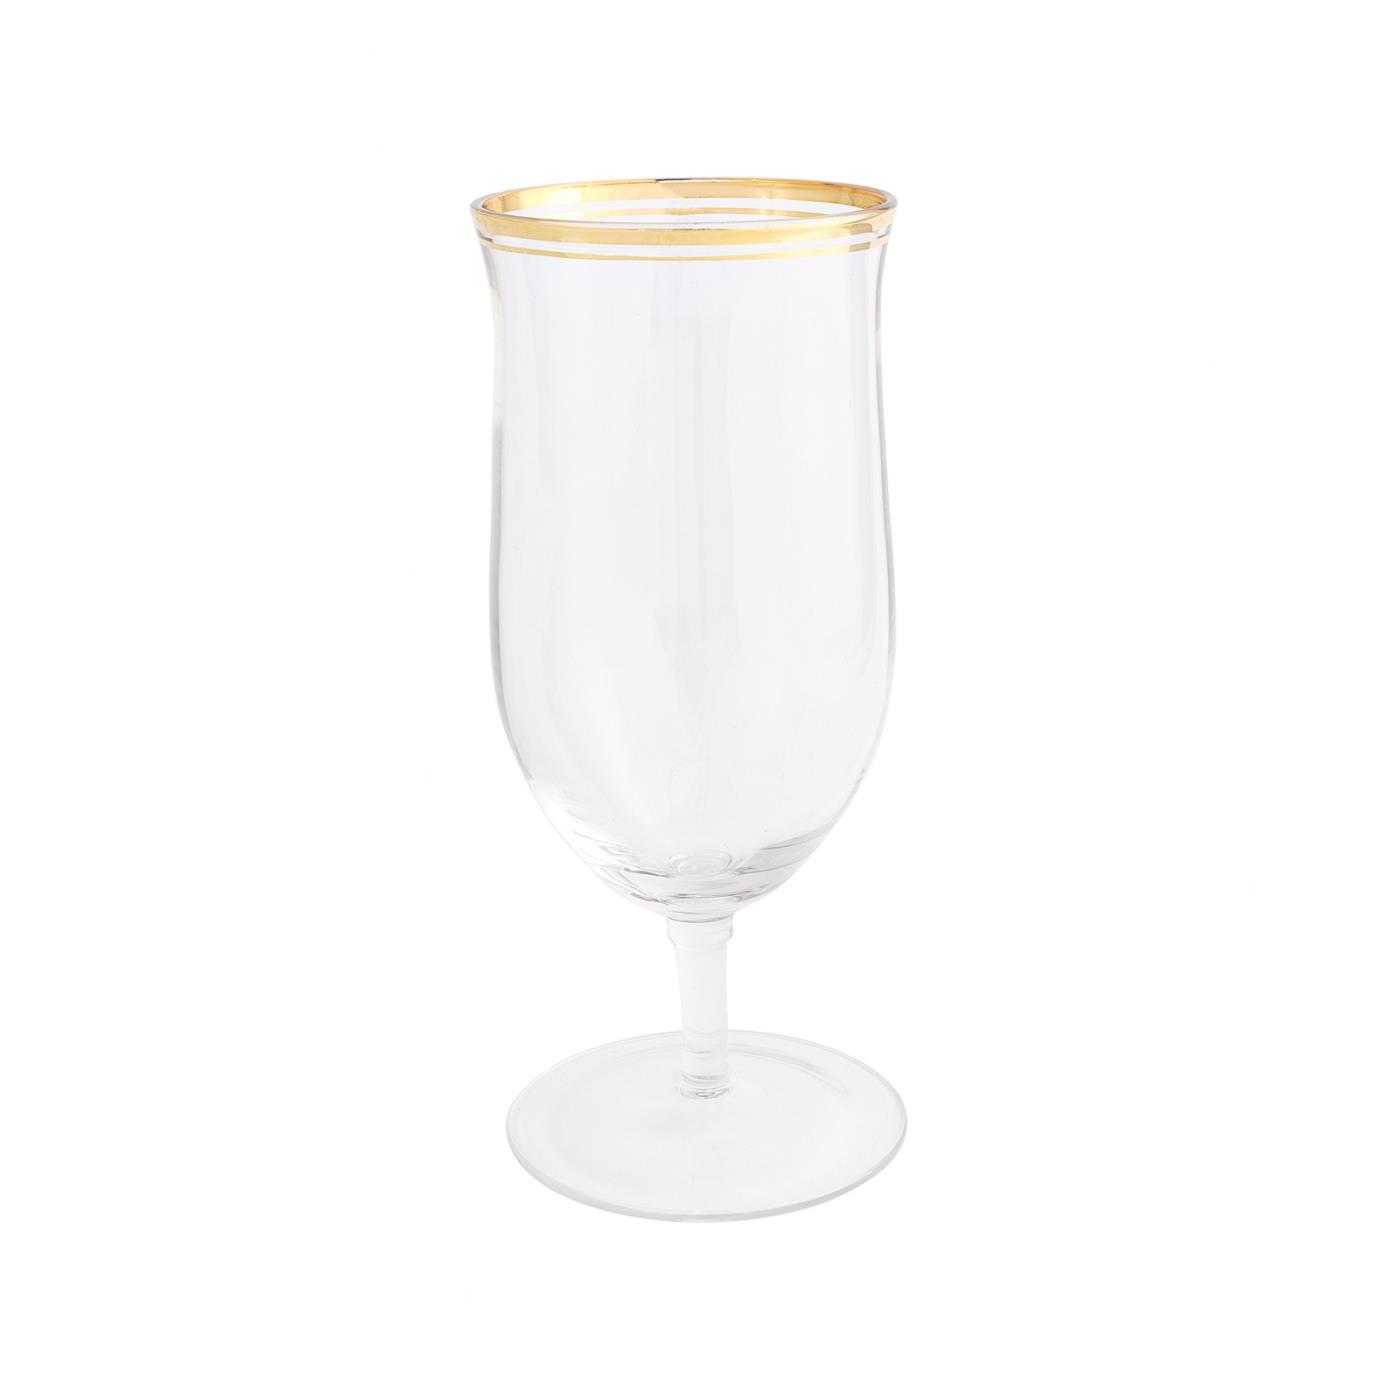 Windsor Gold Collection -  Water Goblet 16 oz